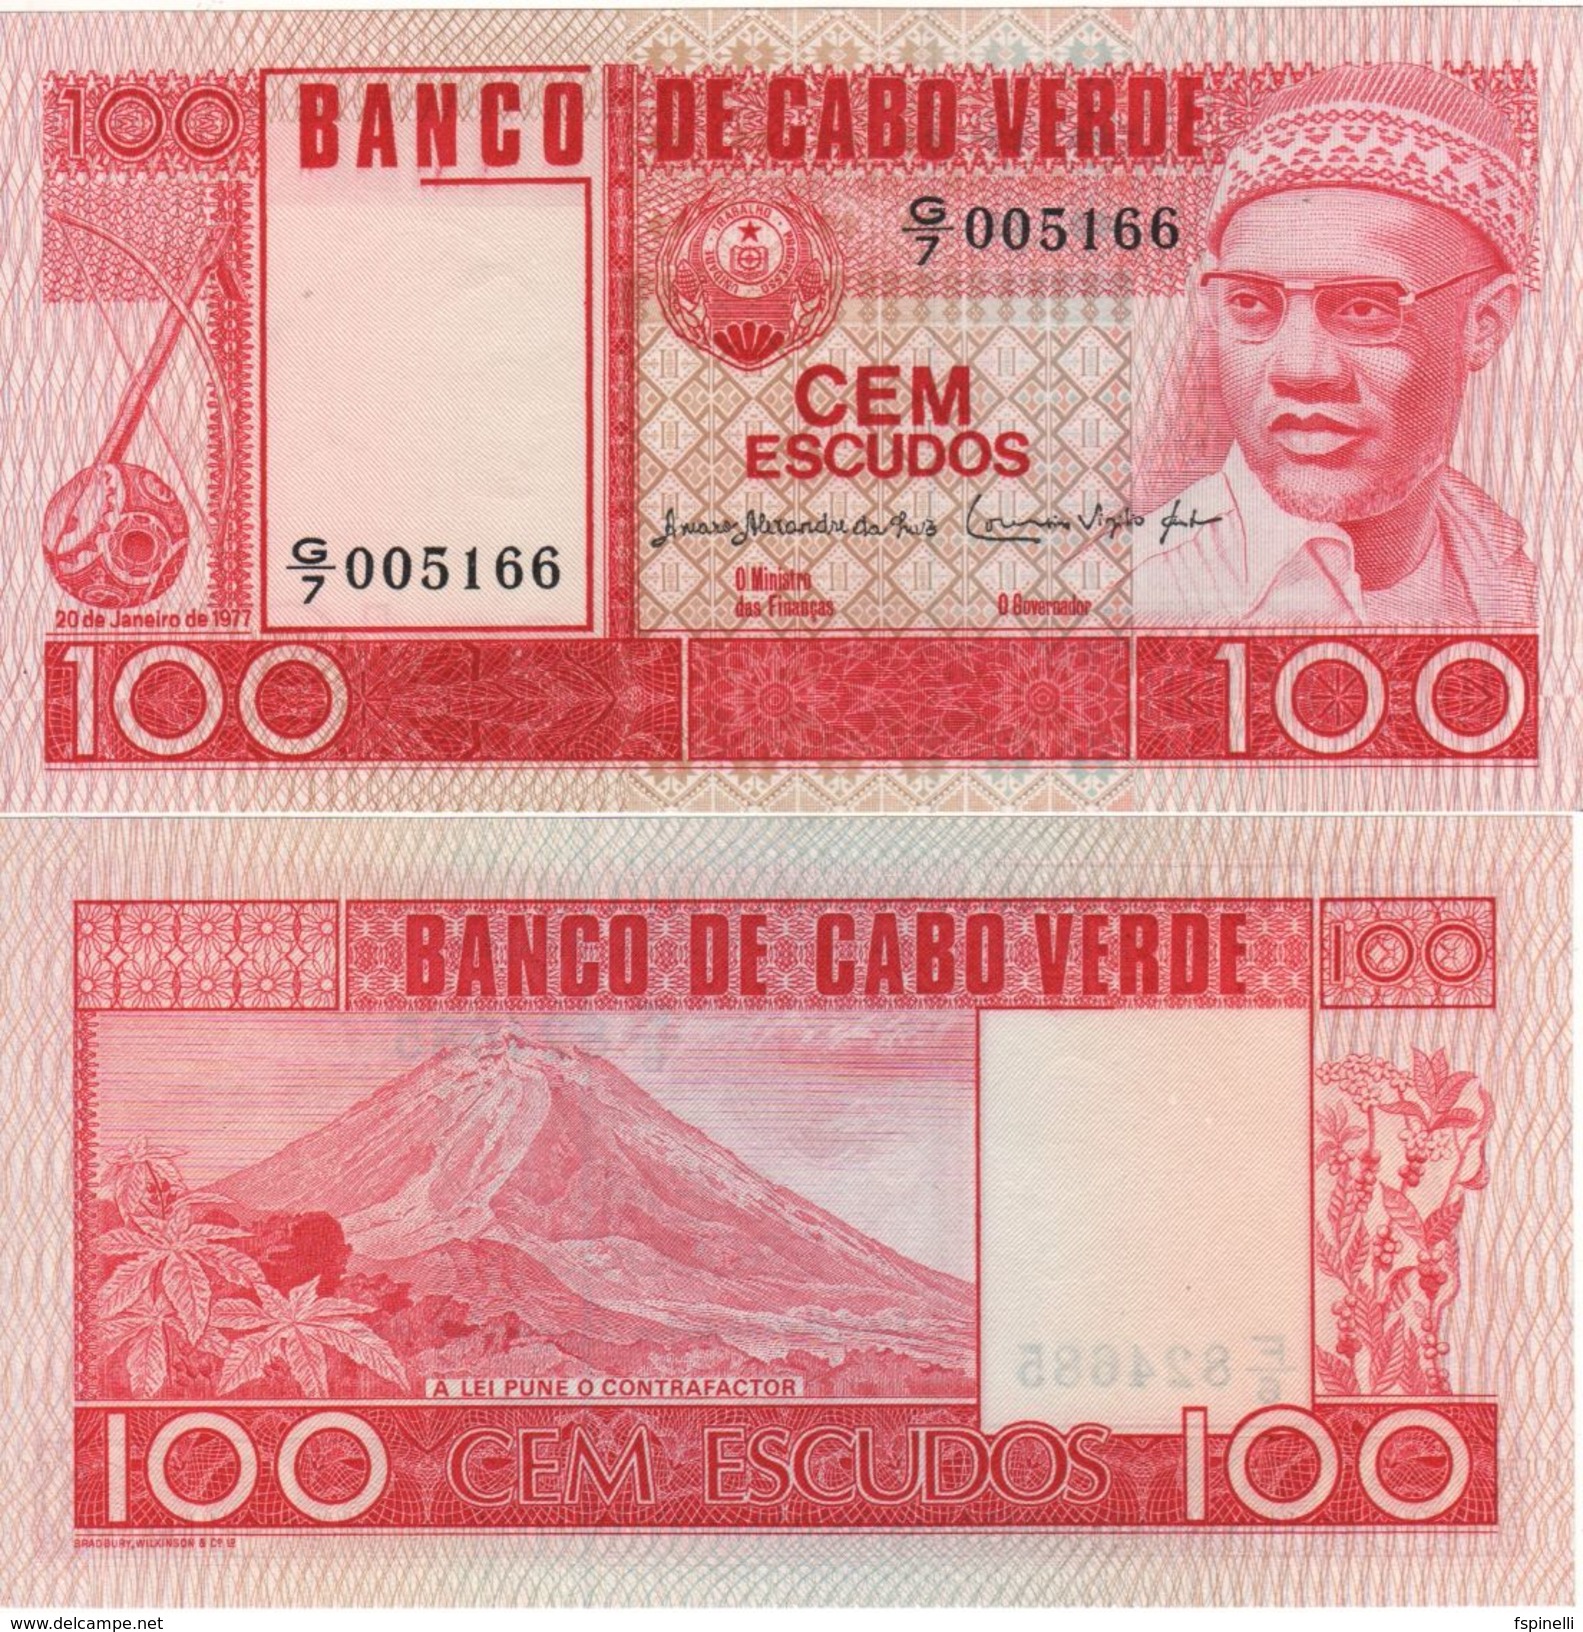 CAPE VERDE   100 Escudos     P54a   Dated 20.1.1977  UNC - Cape Verde